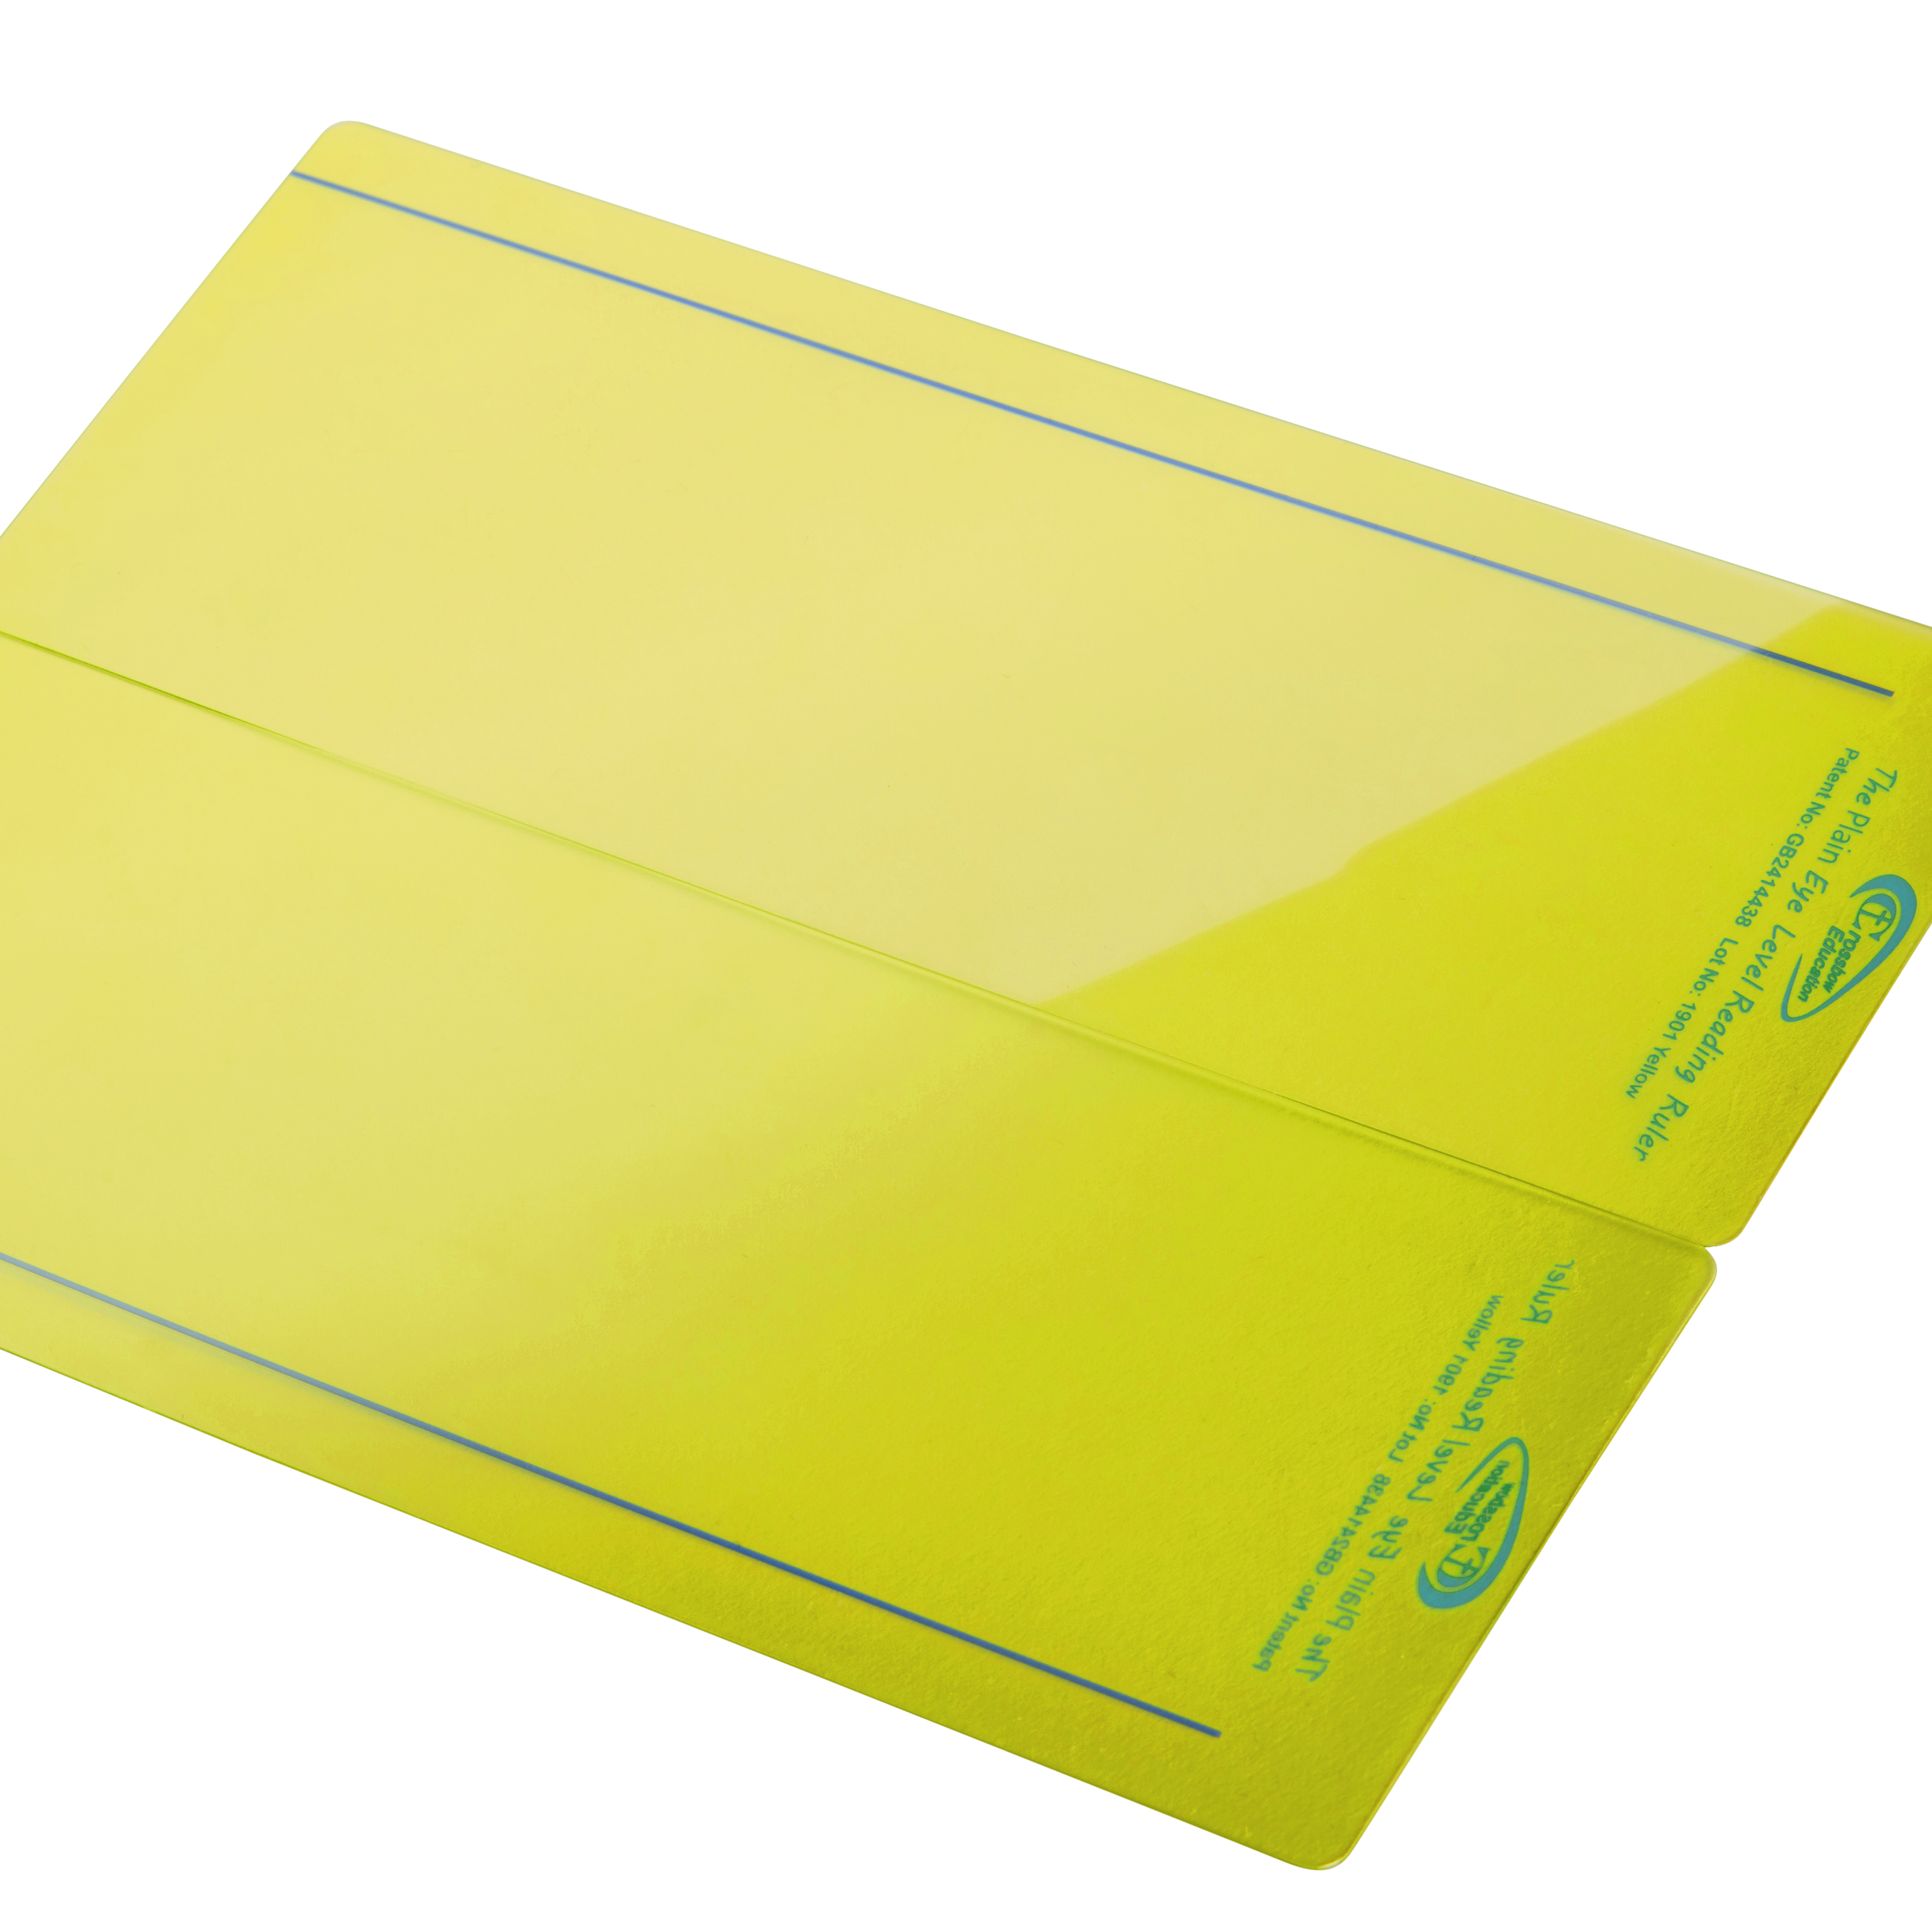 yellow reading ruler overlay